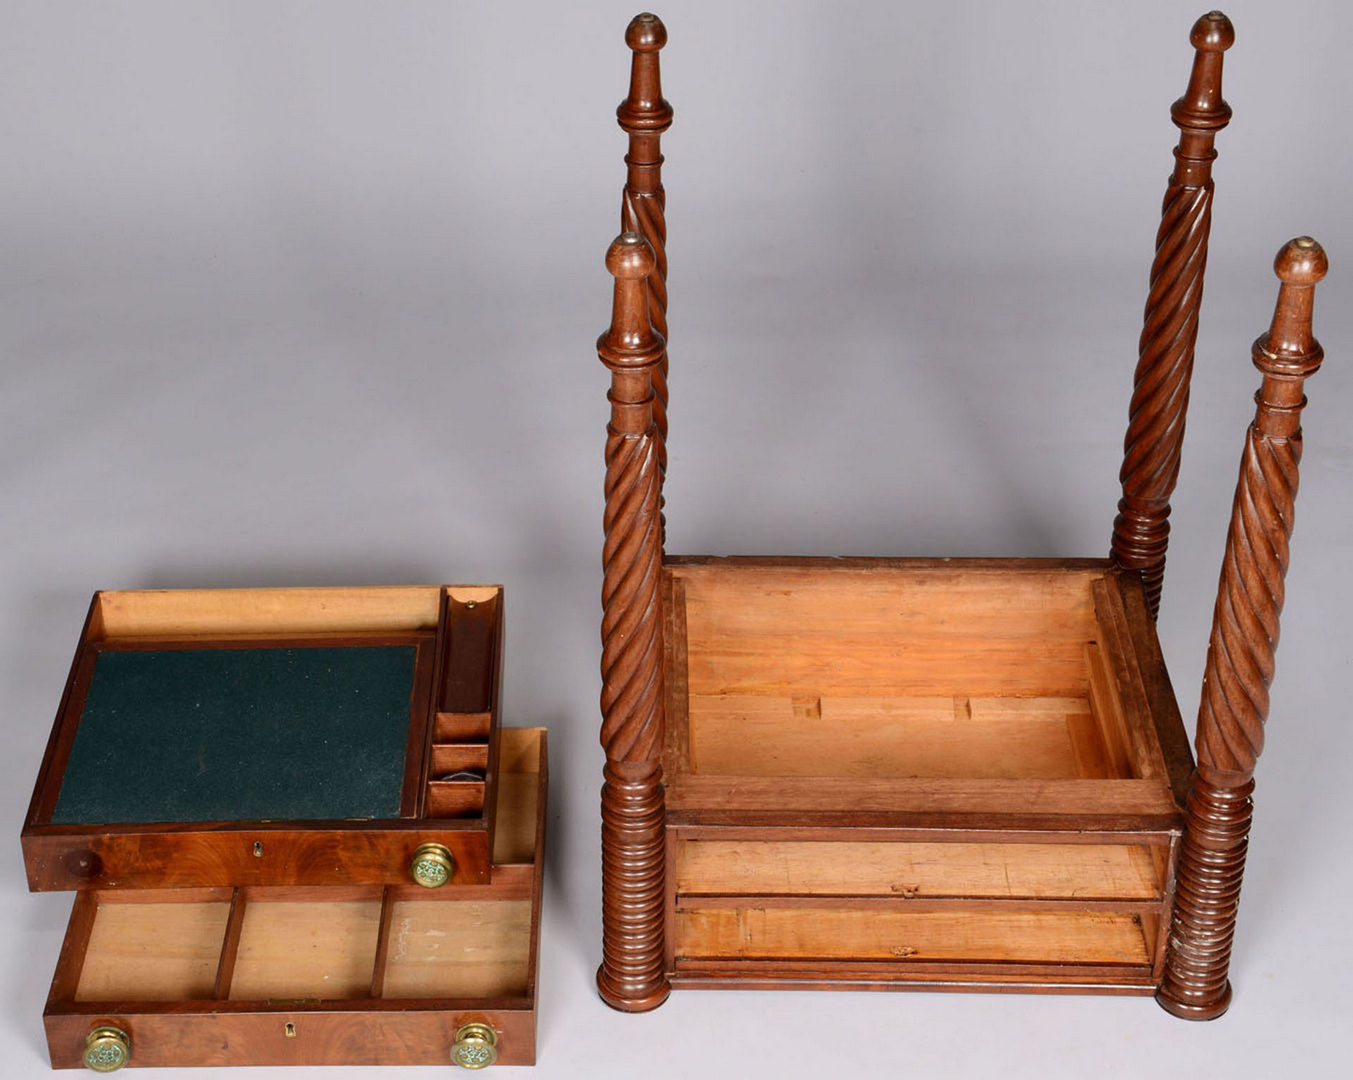 Lot 155: American Sheraton mahogany work/writing table